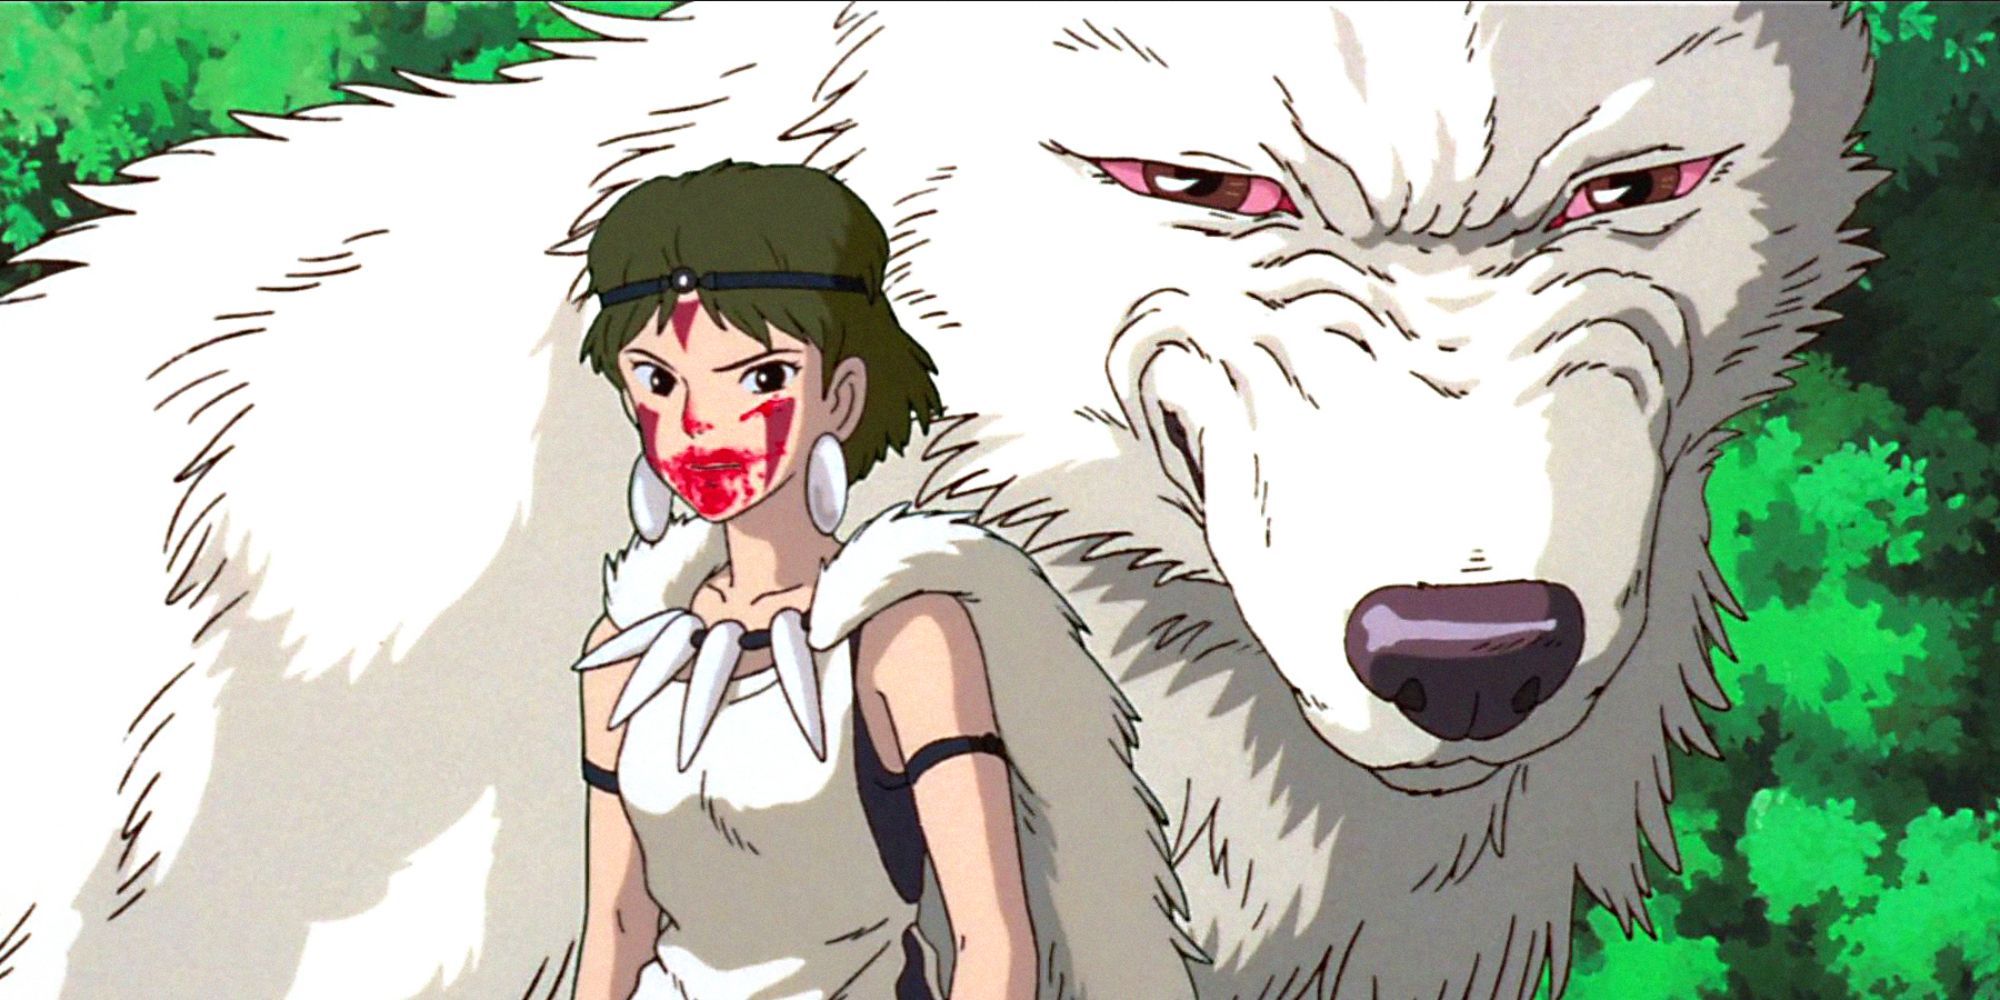 San (aka Princess Mononoke) and her wolf friend from the Studio Ghibli film Princess Mononoke